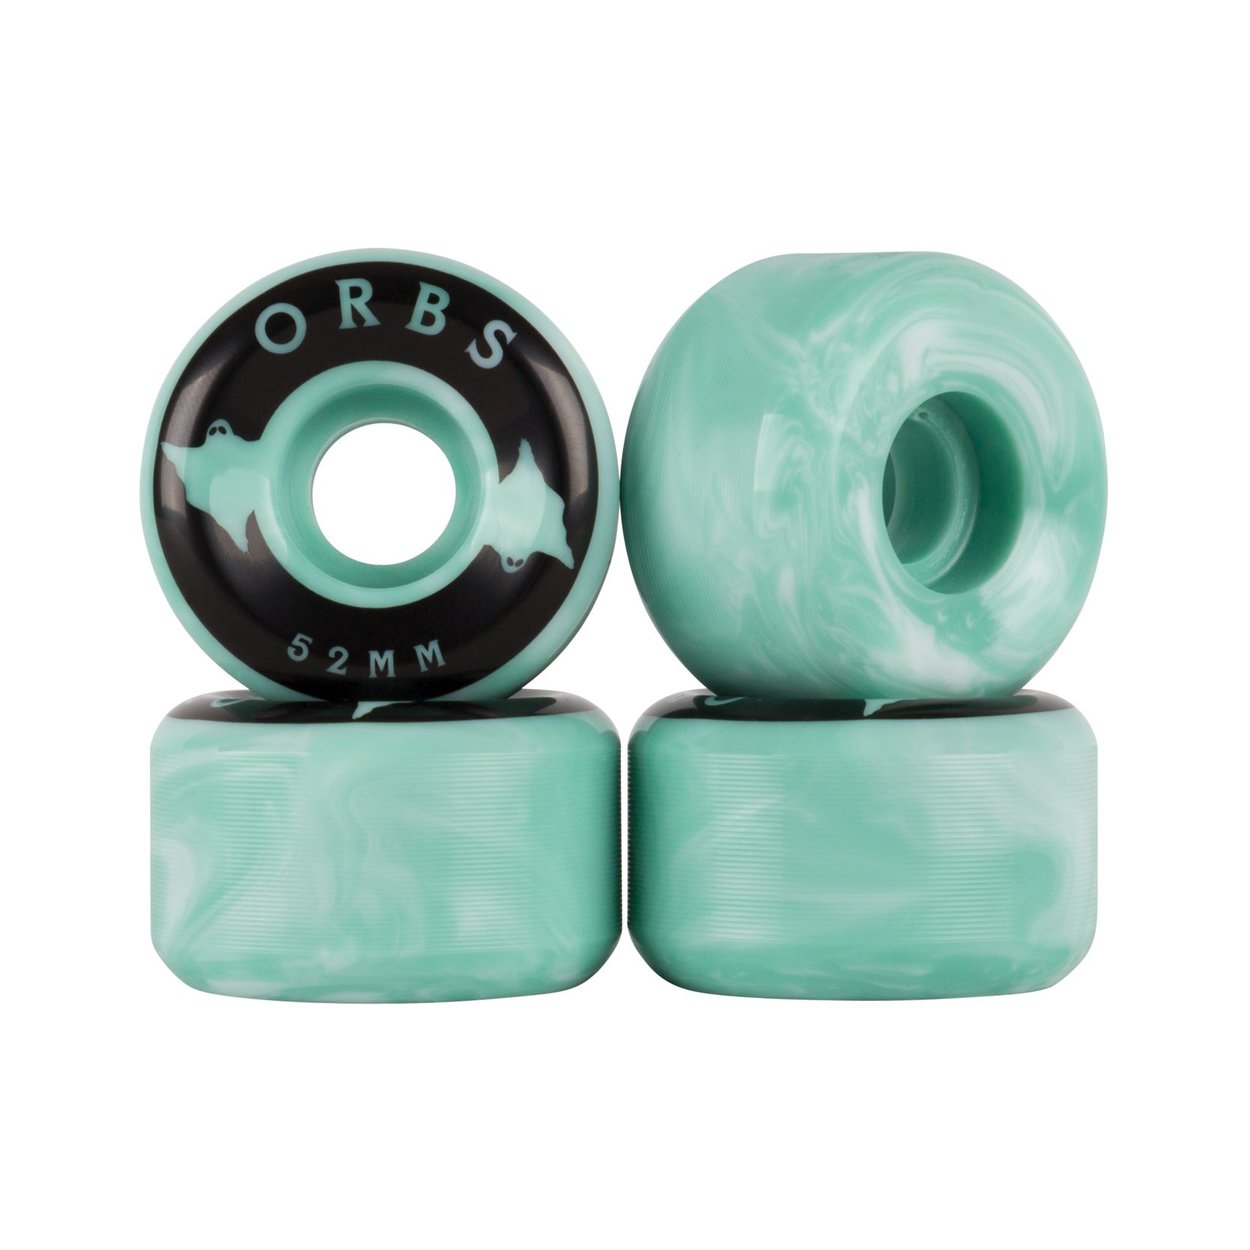 Orbs 99A Full Conical Specter Swirl Skateboard Wheels - Teal/White